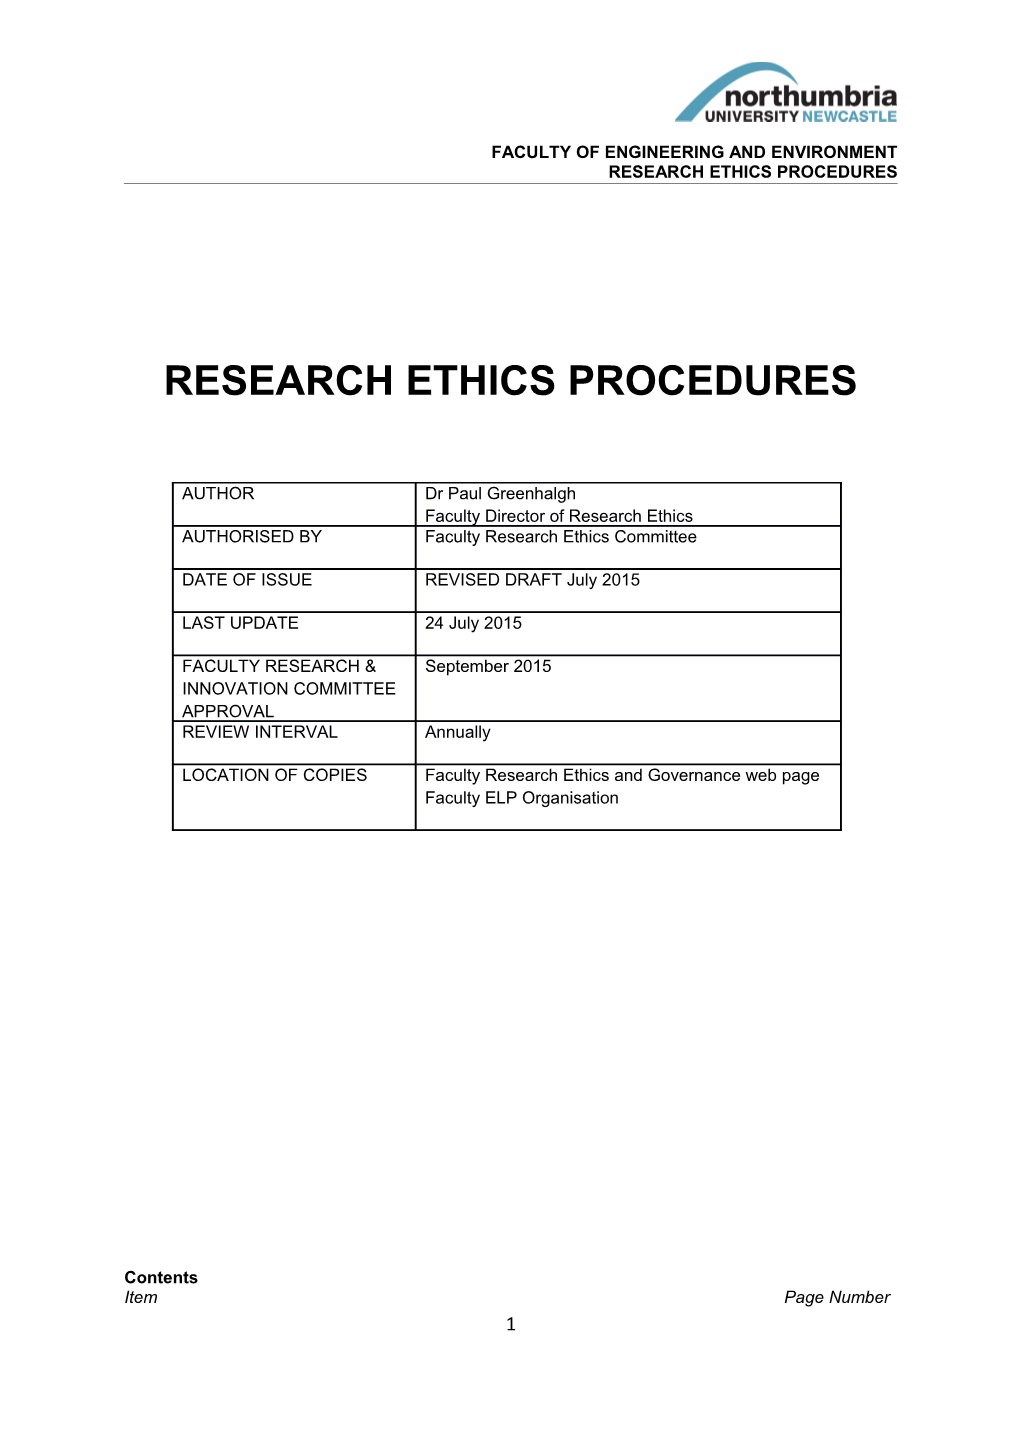 Research Ethics Procedures